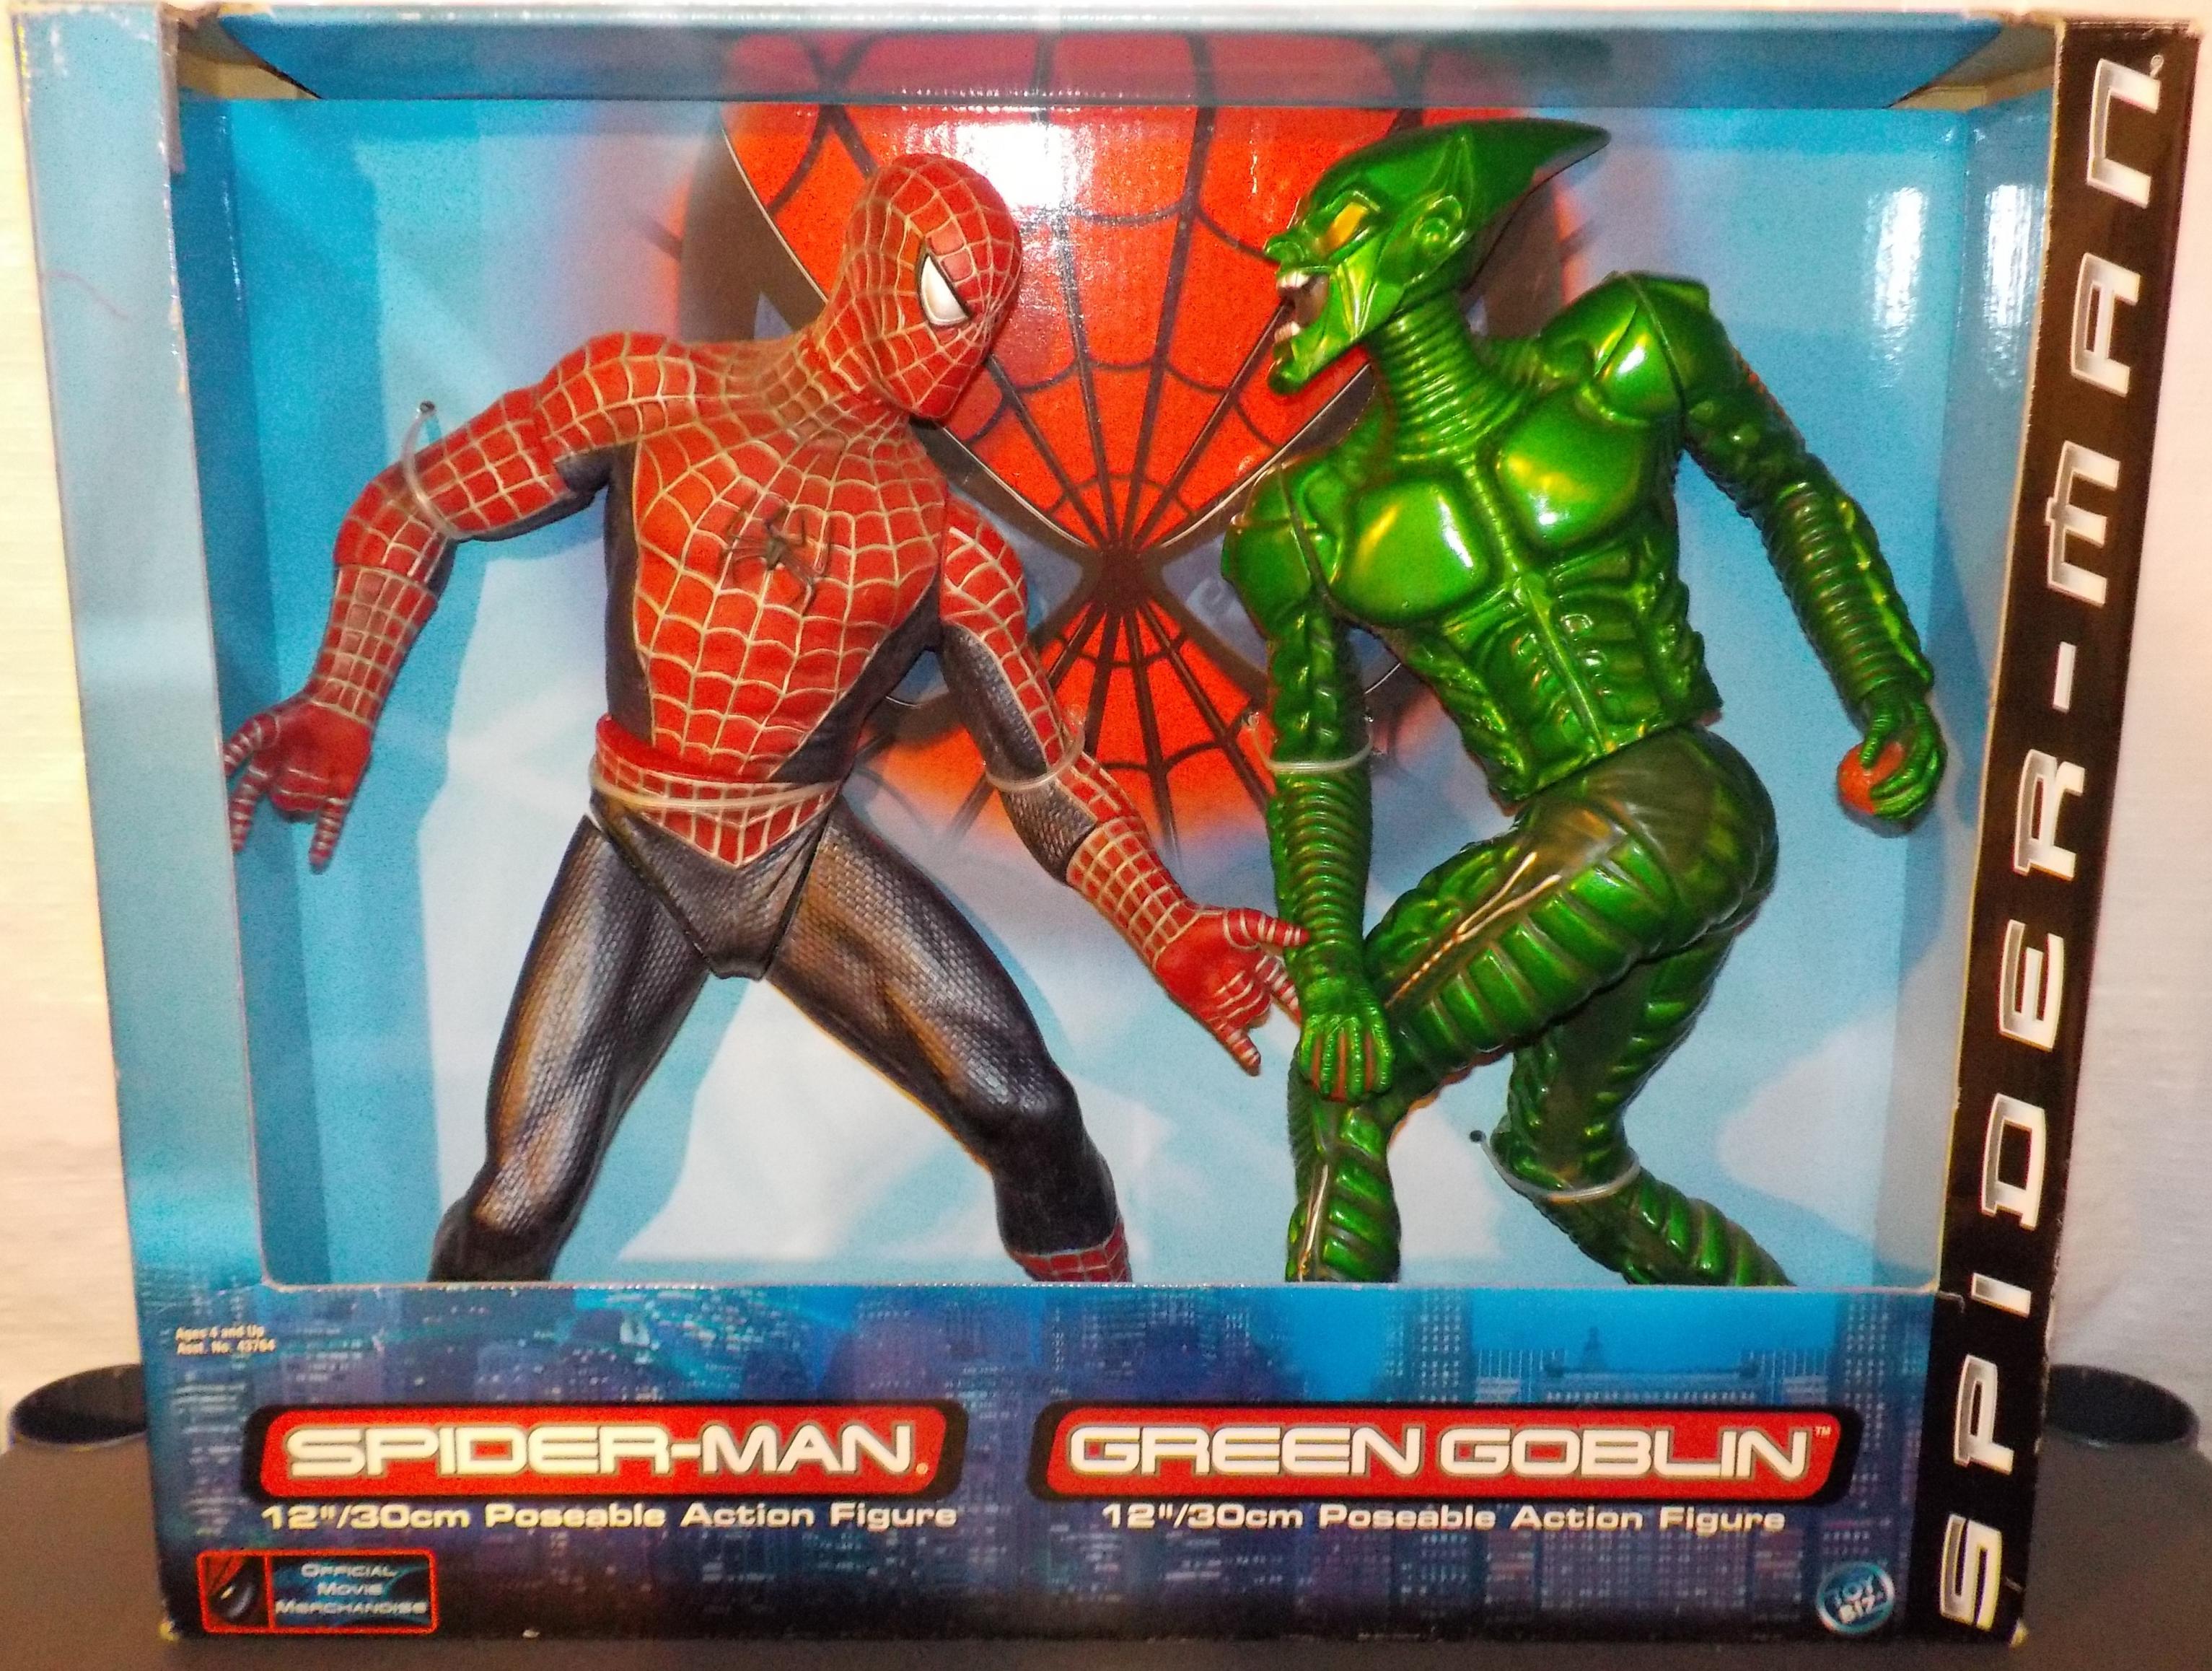 green spiderman figure